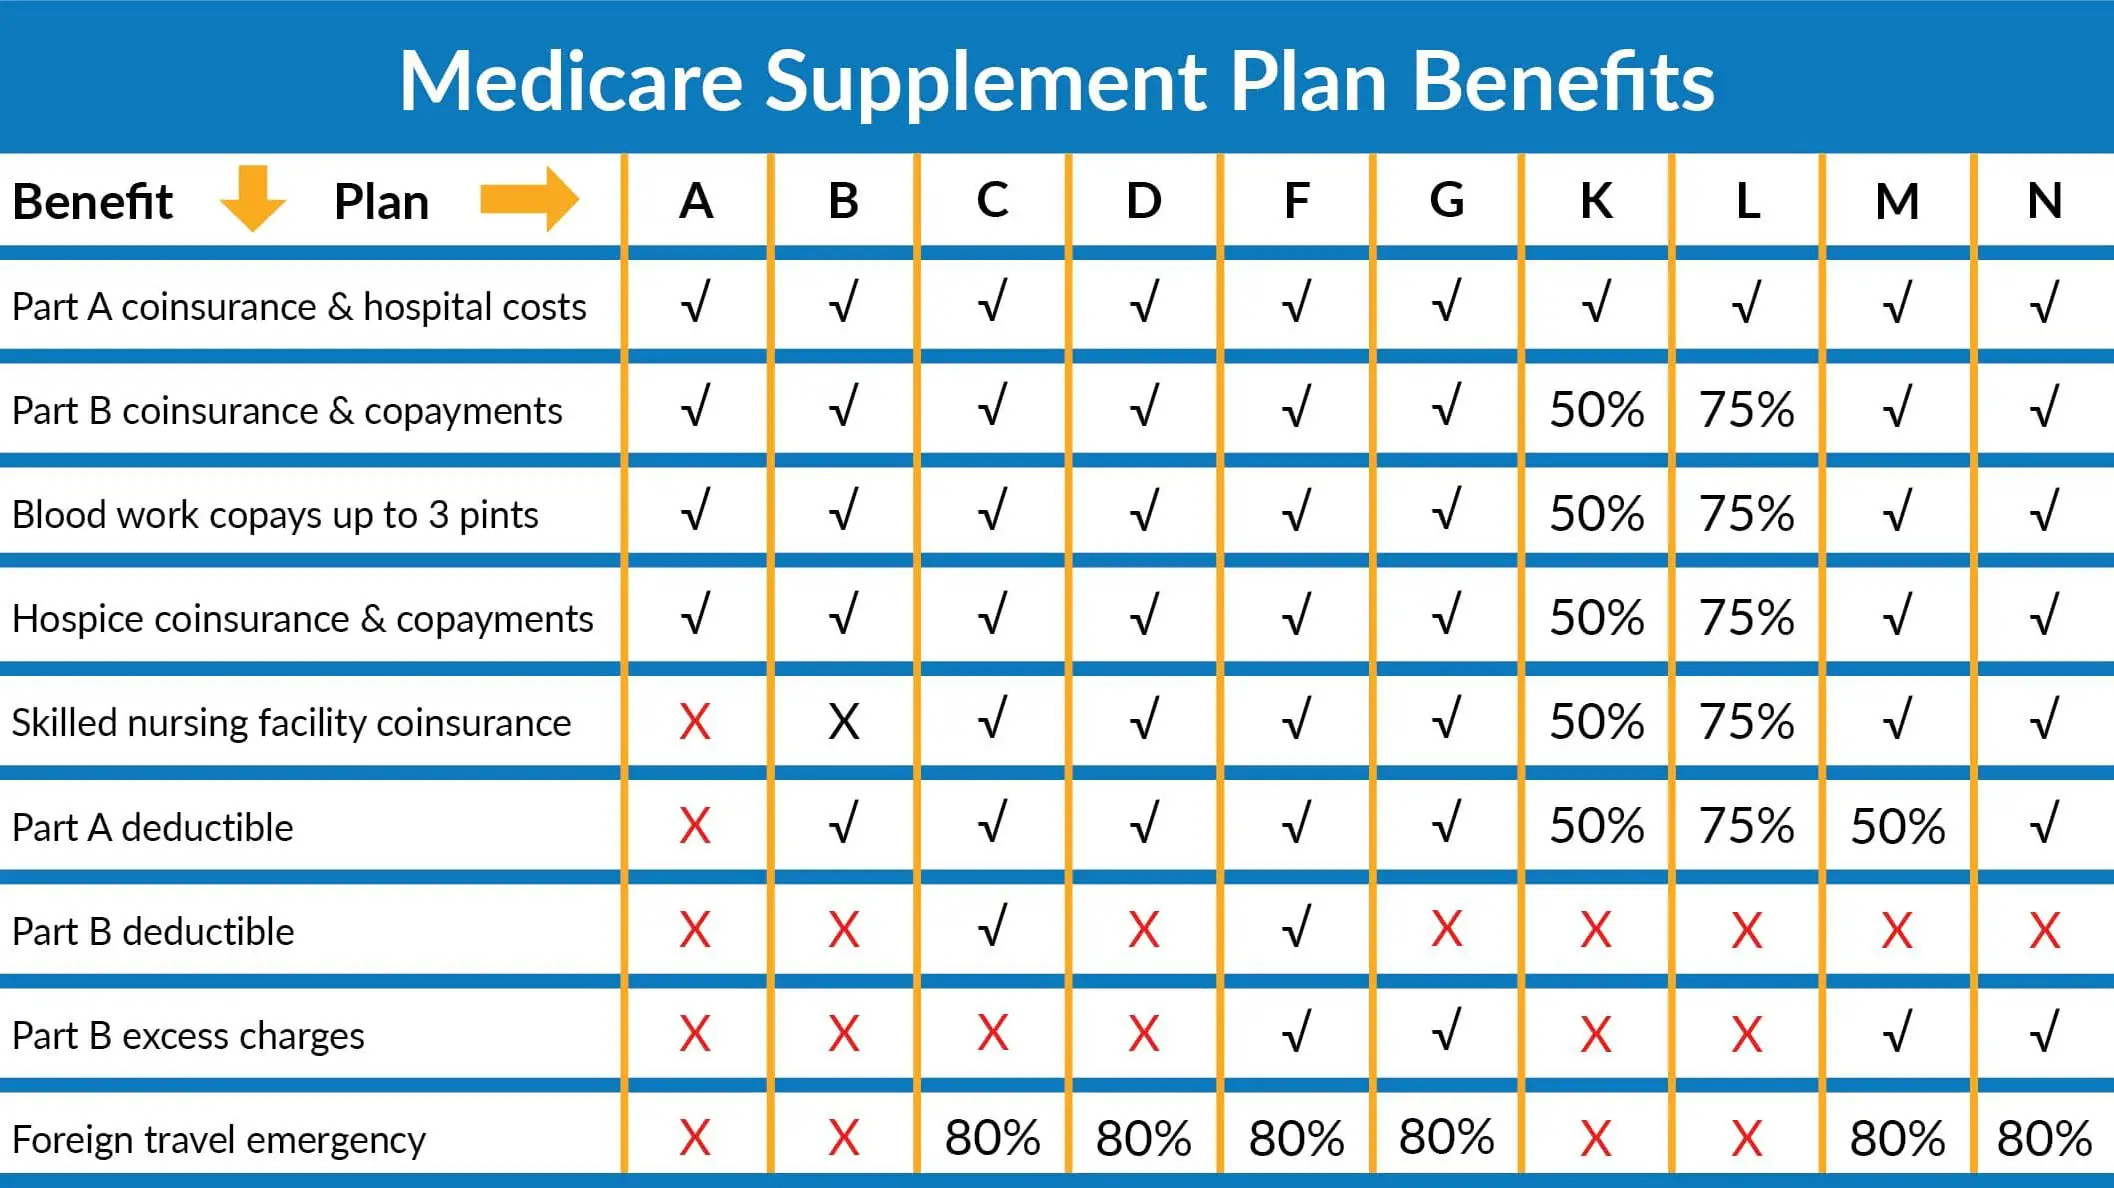 How Do Medicare Supplement Plans Work?